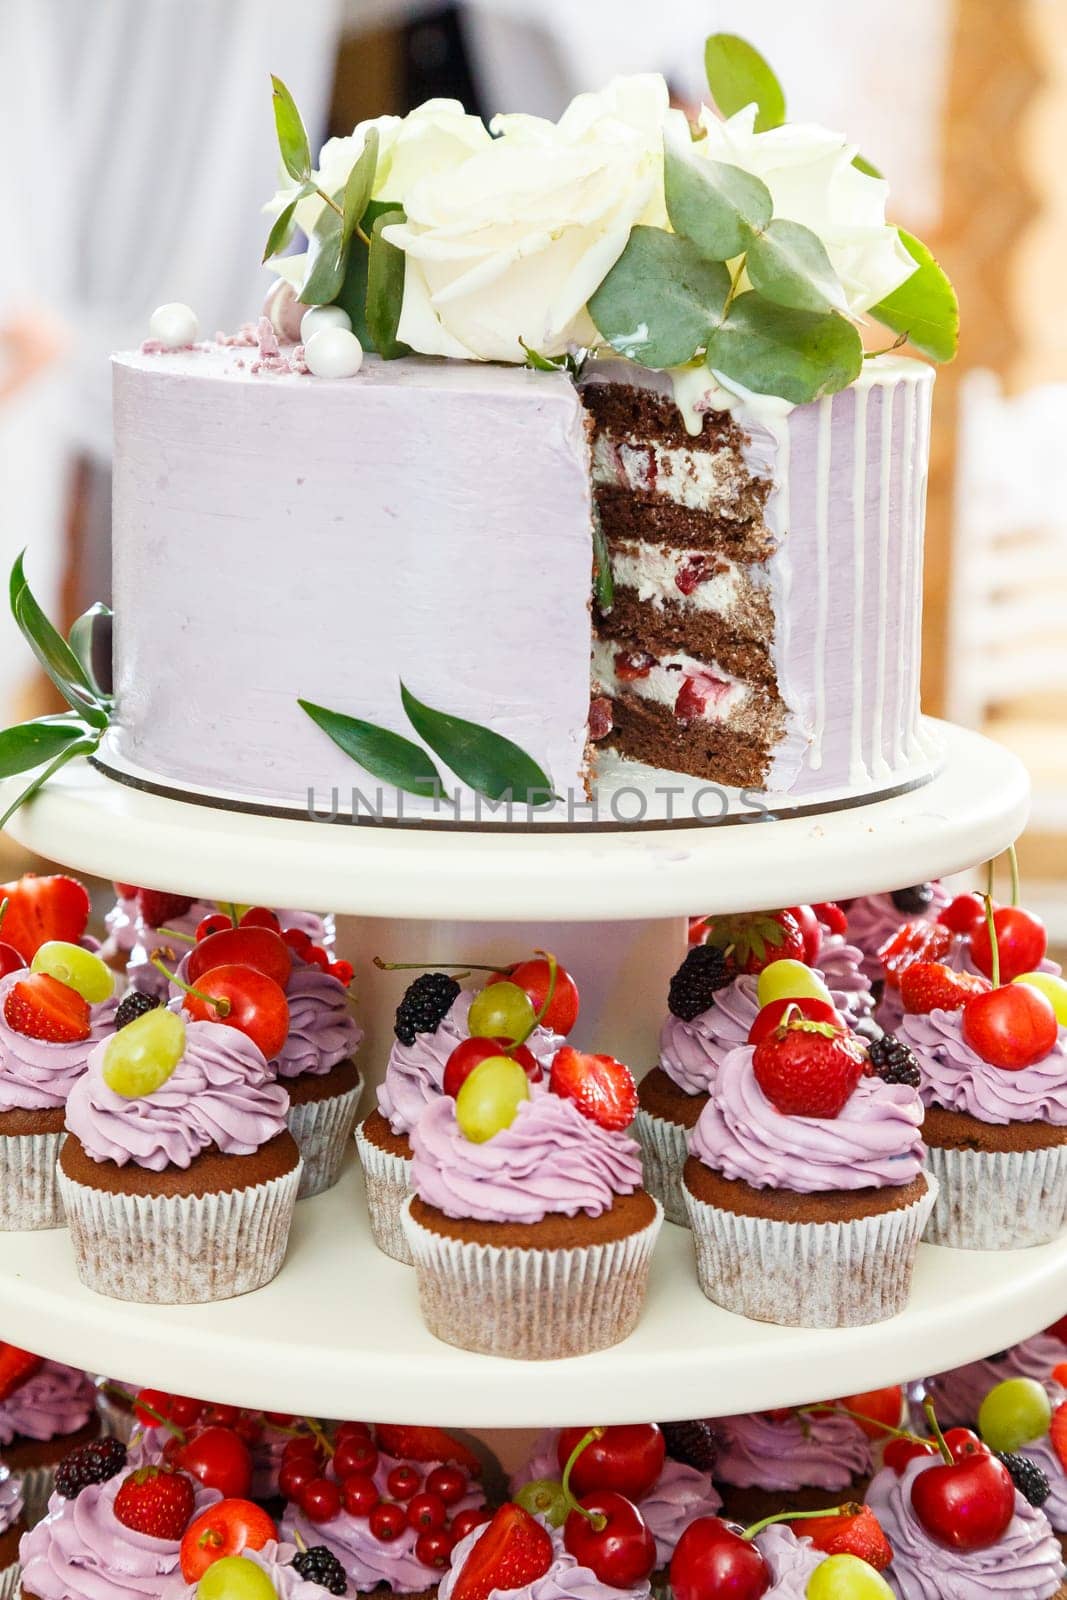 Beautiful and sweet wedding cake for newlyweds by Dmitrytph